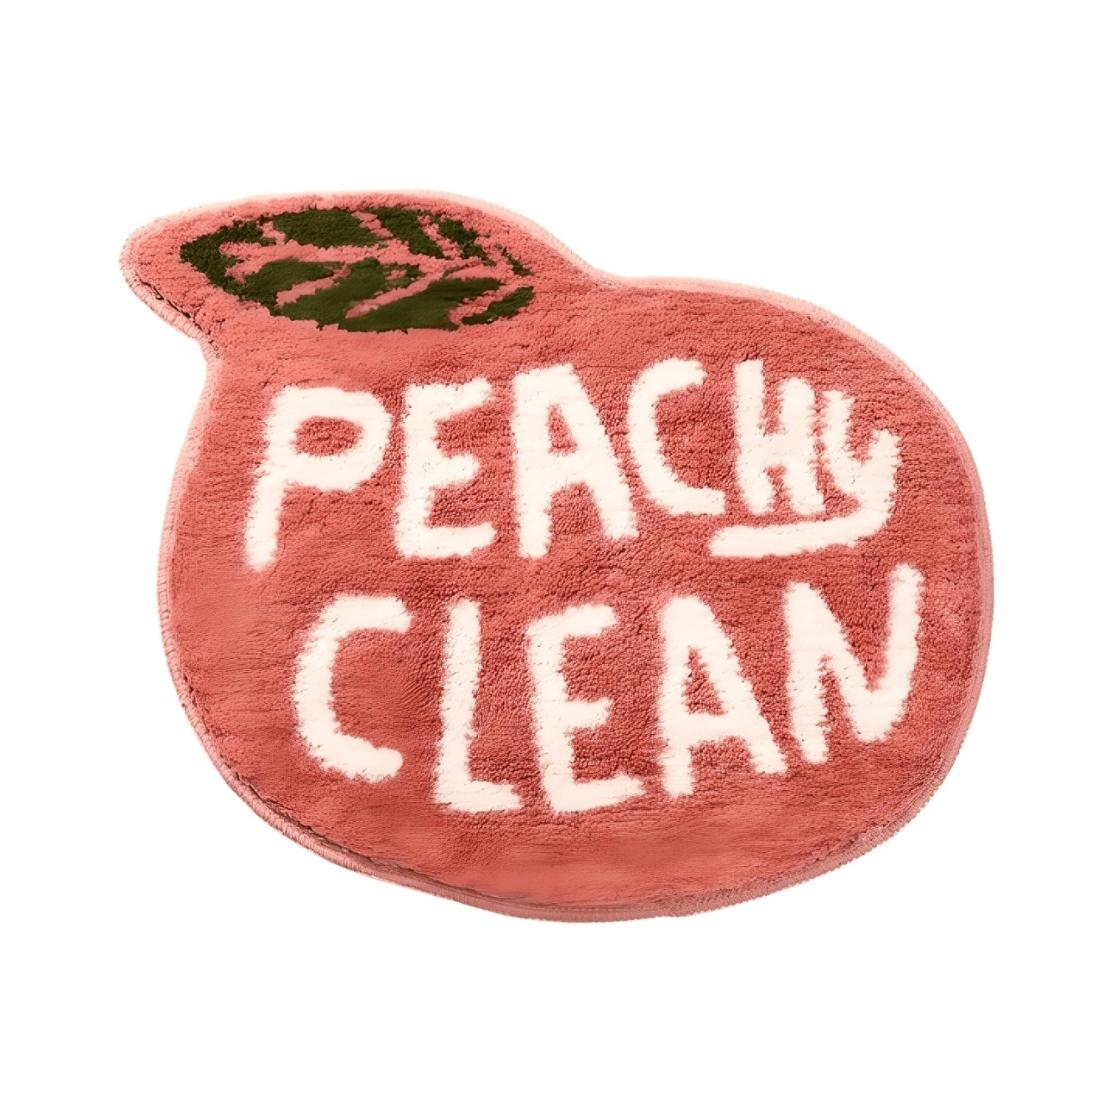 Pink peach bathmat with text